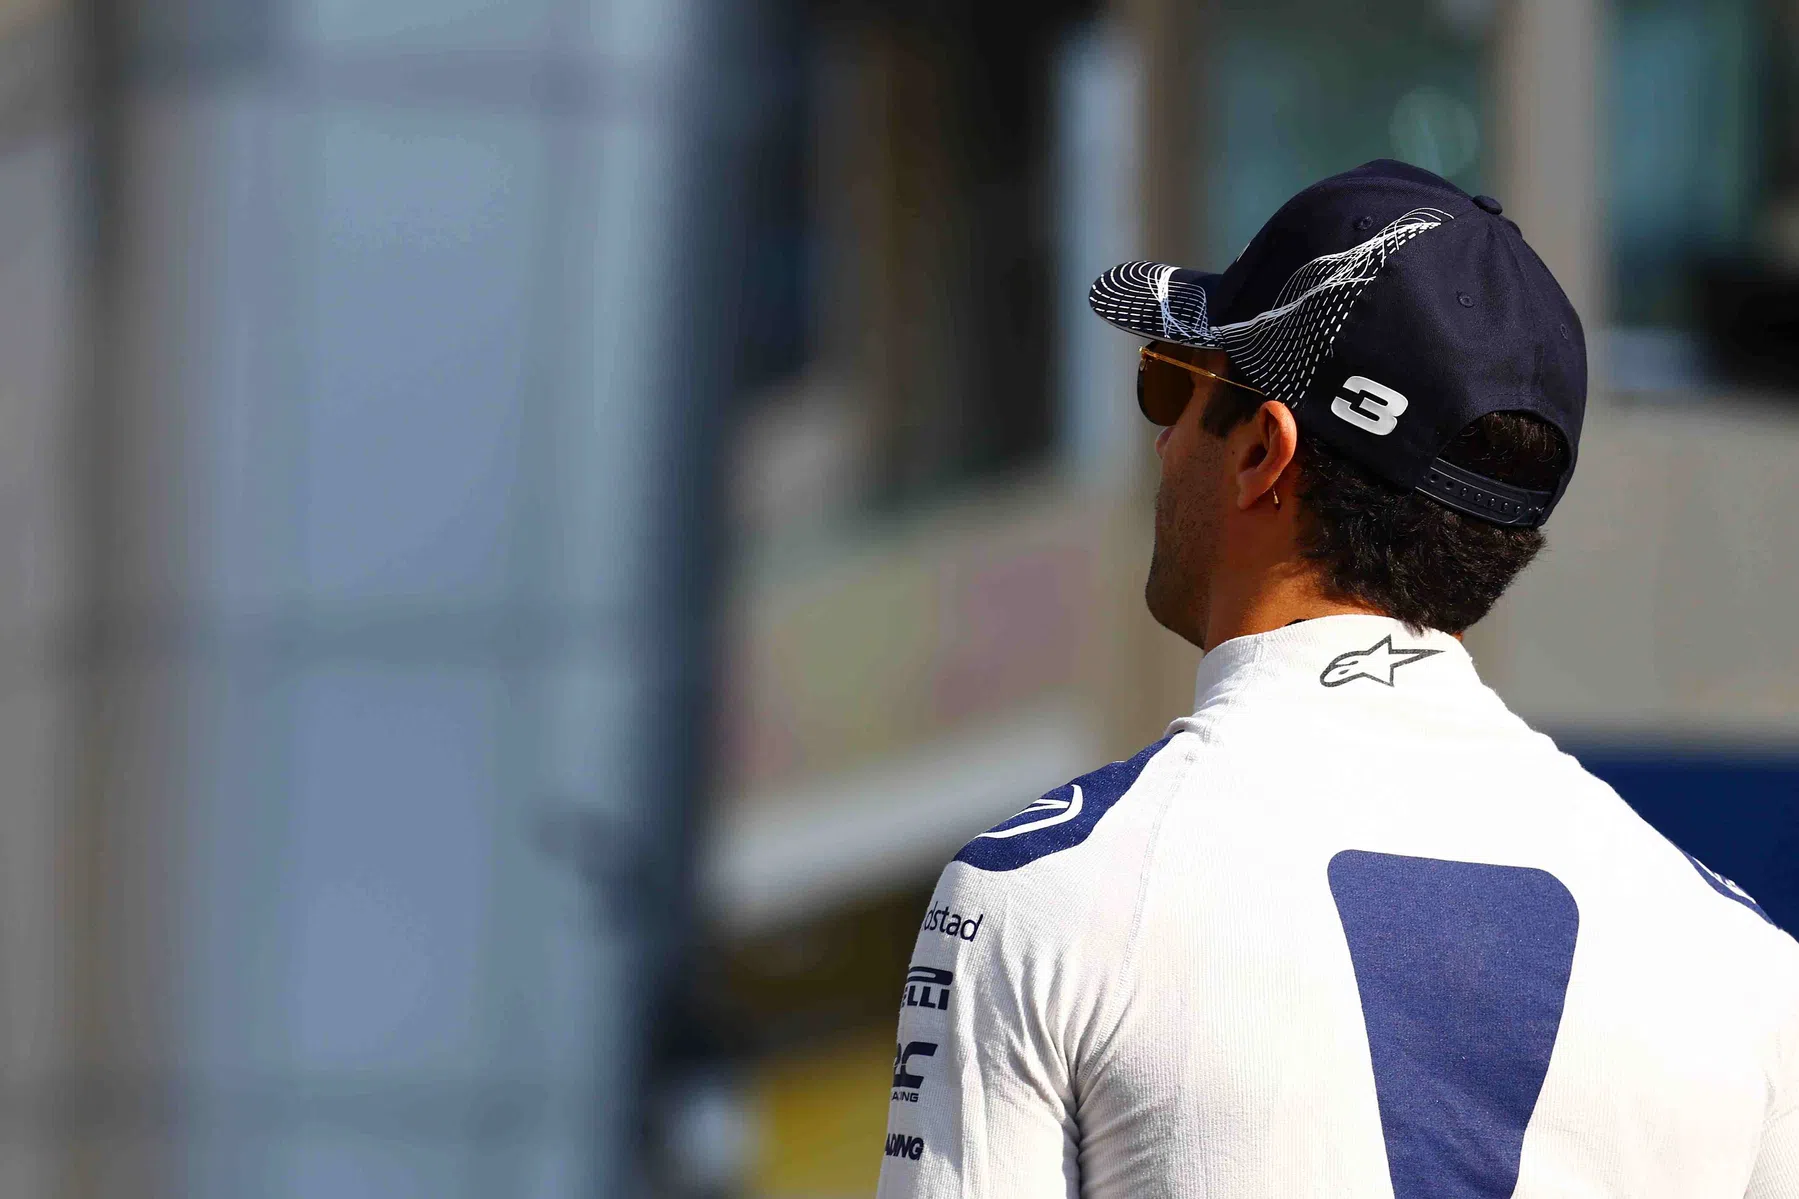 Ricciardo blij met progressie AlphaTauri na gp abu dhabi